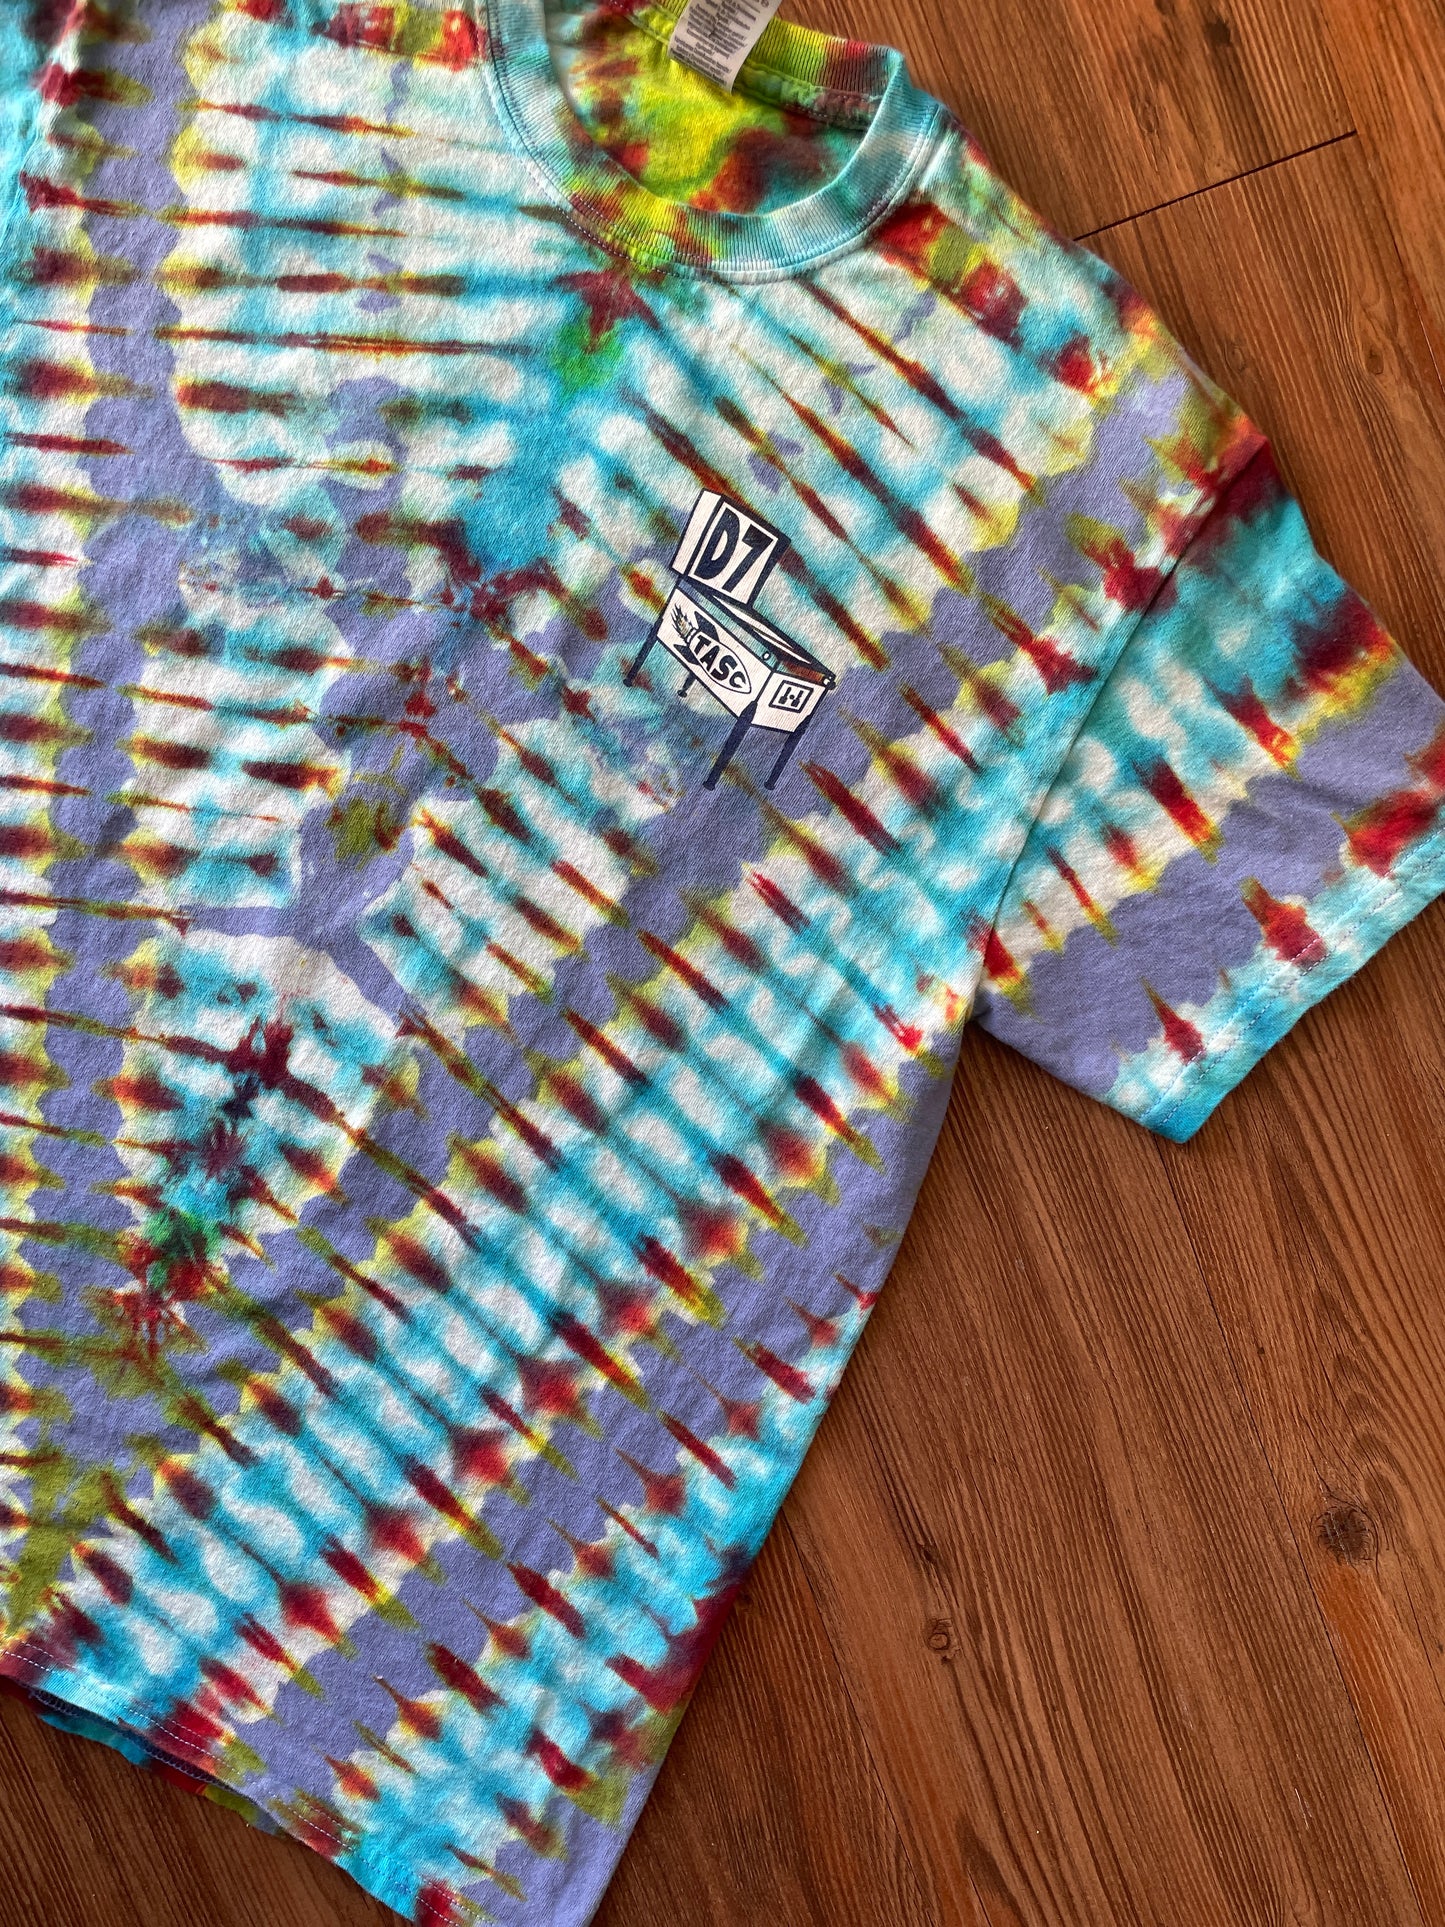 MEDIUM Men’s Pinball Beat Your High Score Handmade Tie Dye T-Shirt | One-Of-a-Kind Funky Multicolor Short Sleeve